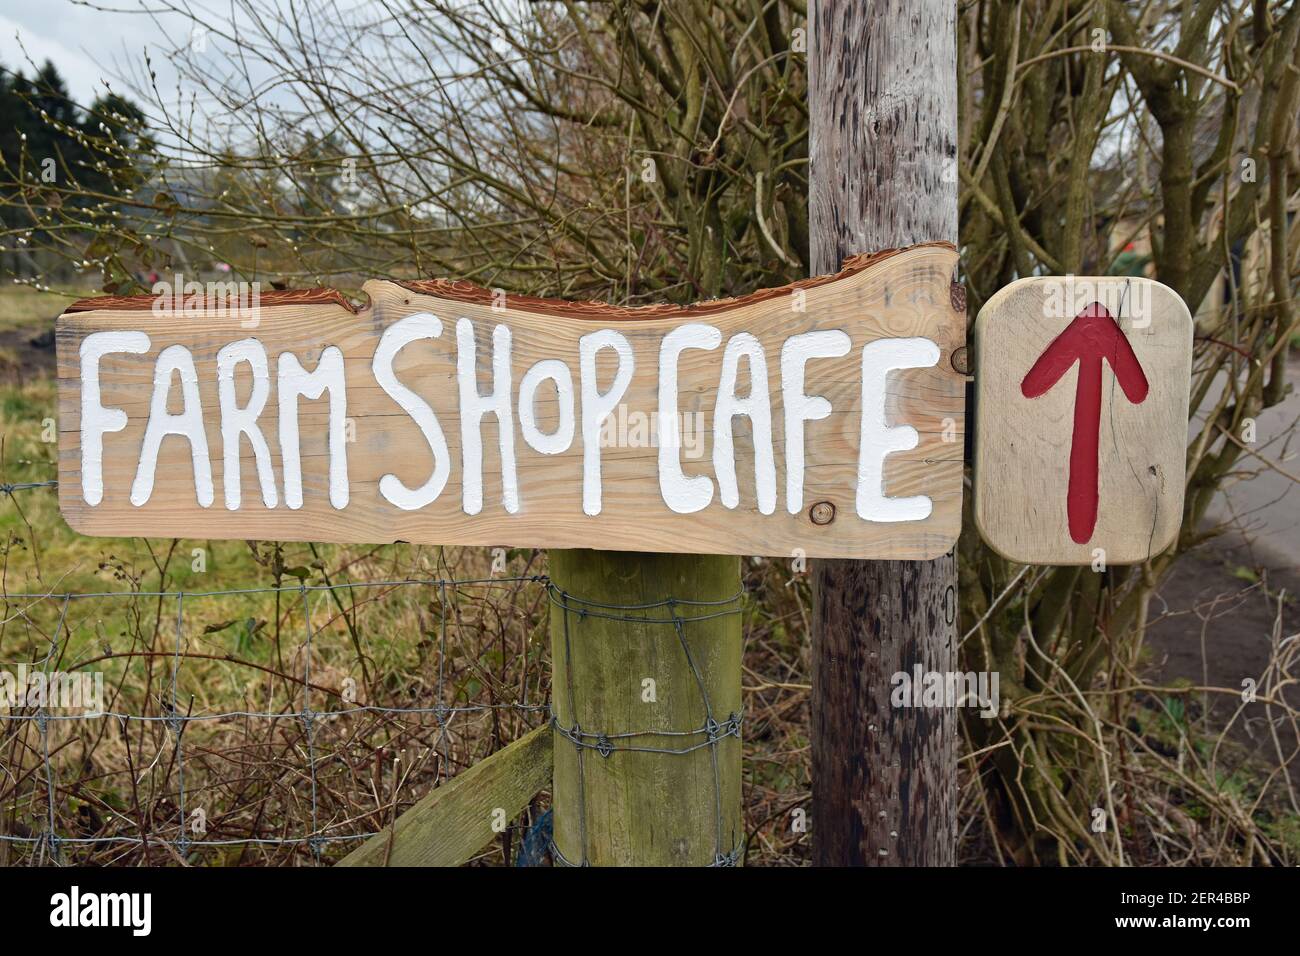 Rustikales Farm Shop Cafe Schild mit Pfeil. Pillars of Hercules, Falkland, Fife, Schottland, Großbritannien. Stockfoto